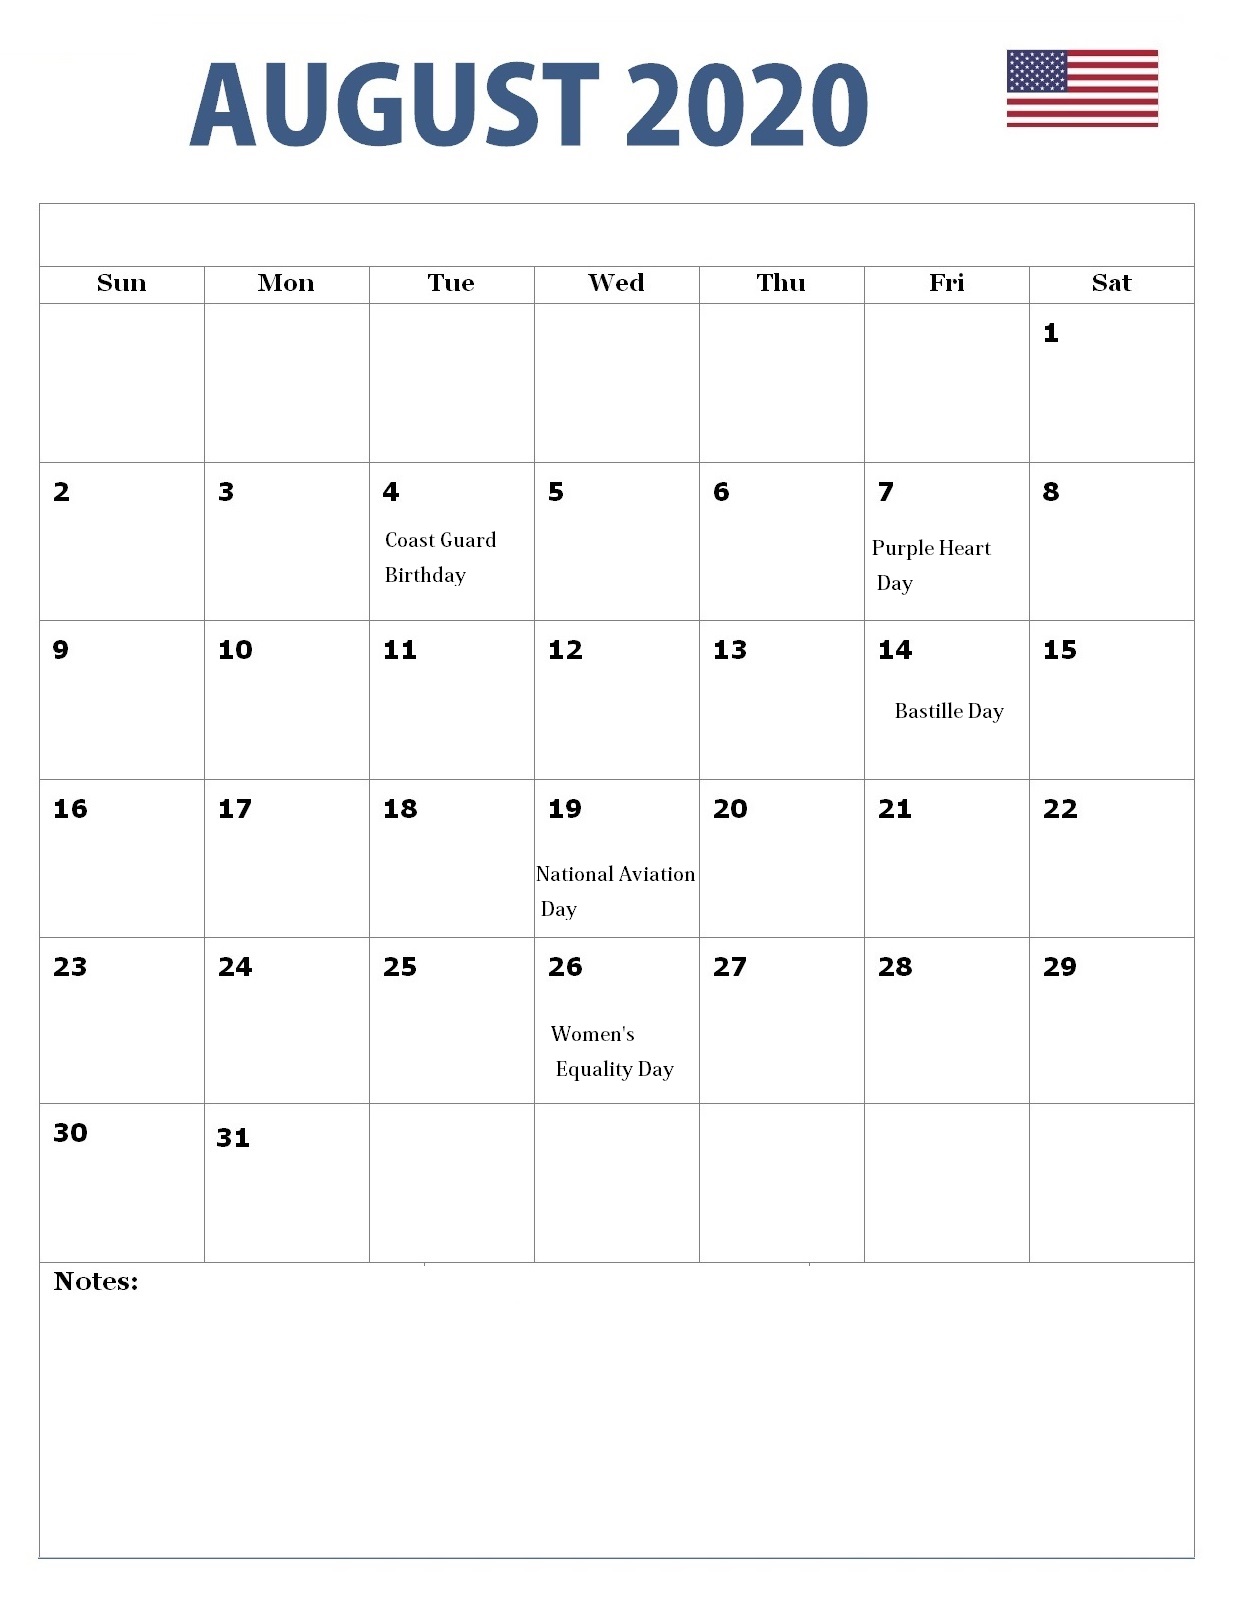 USA August 2020 Holidays Calendar